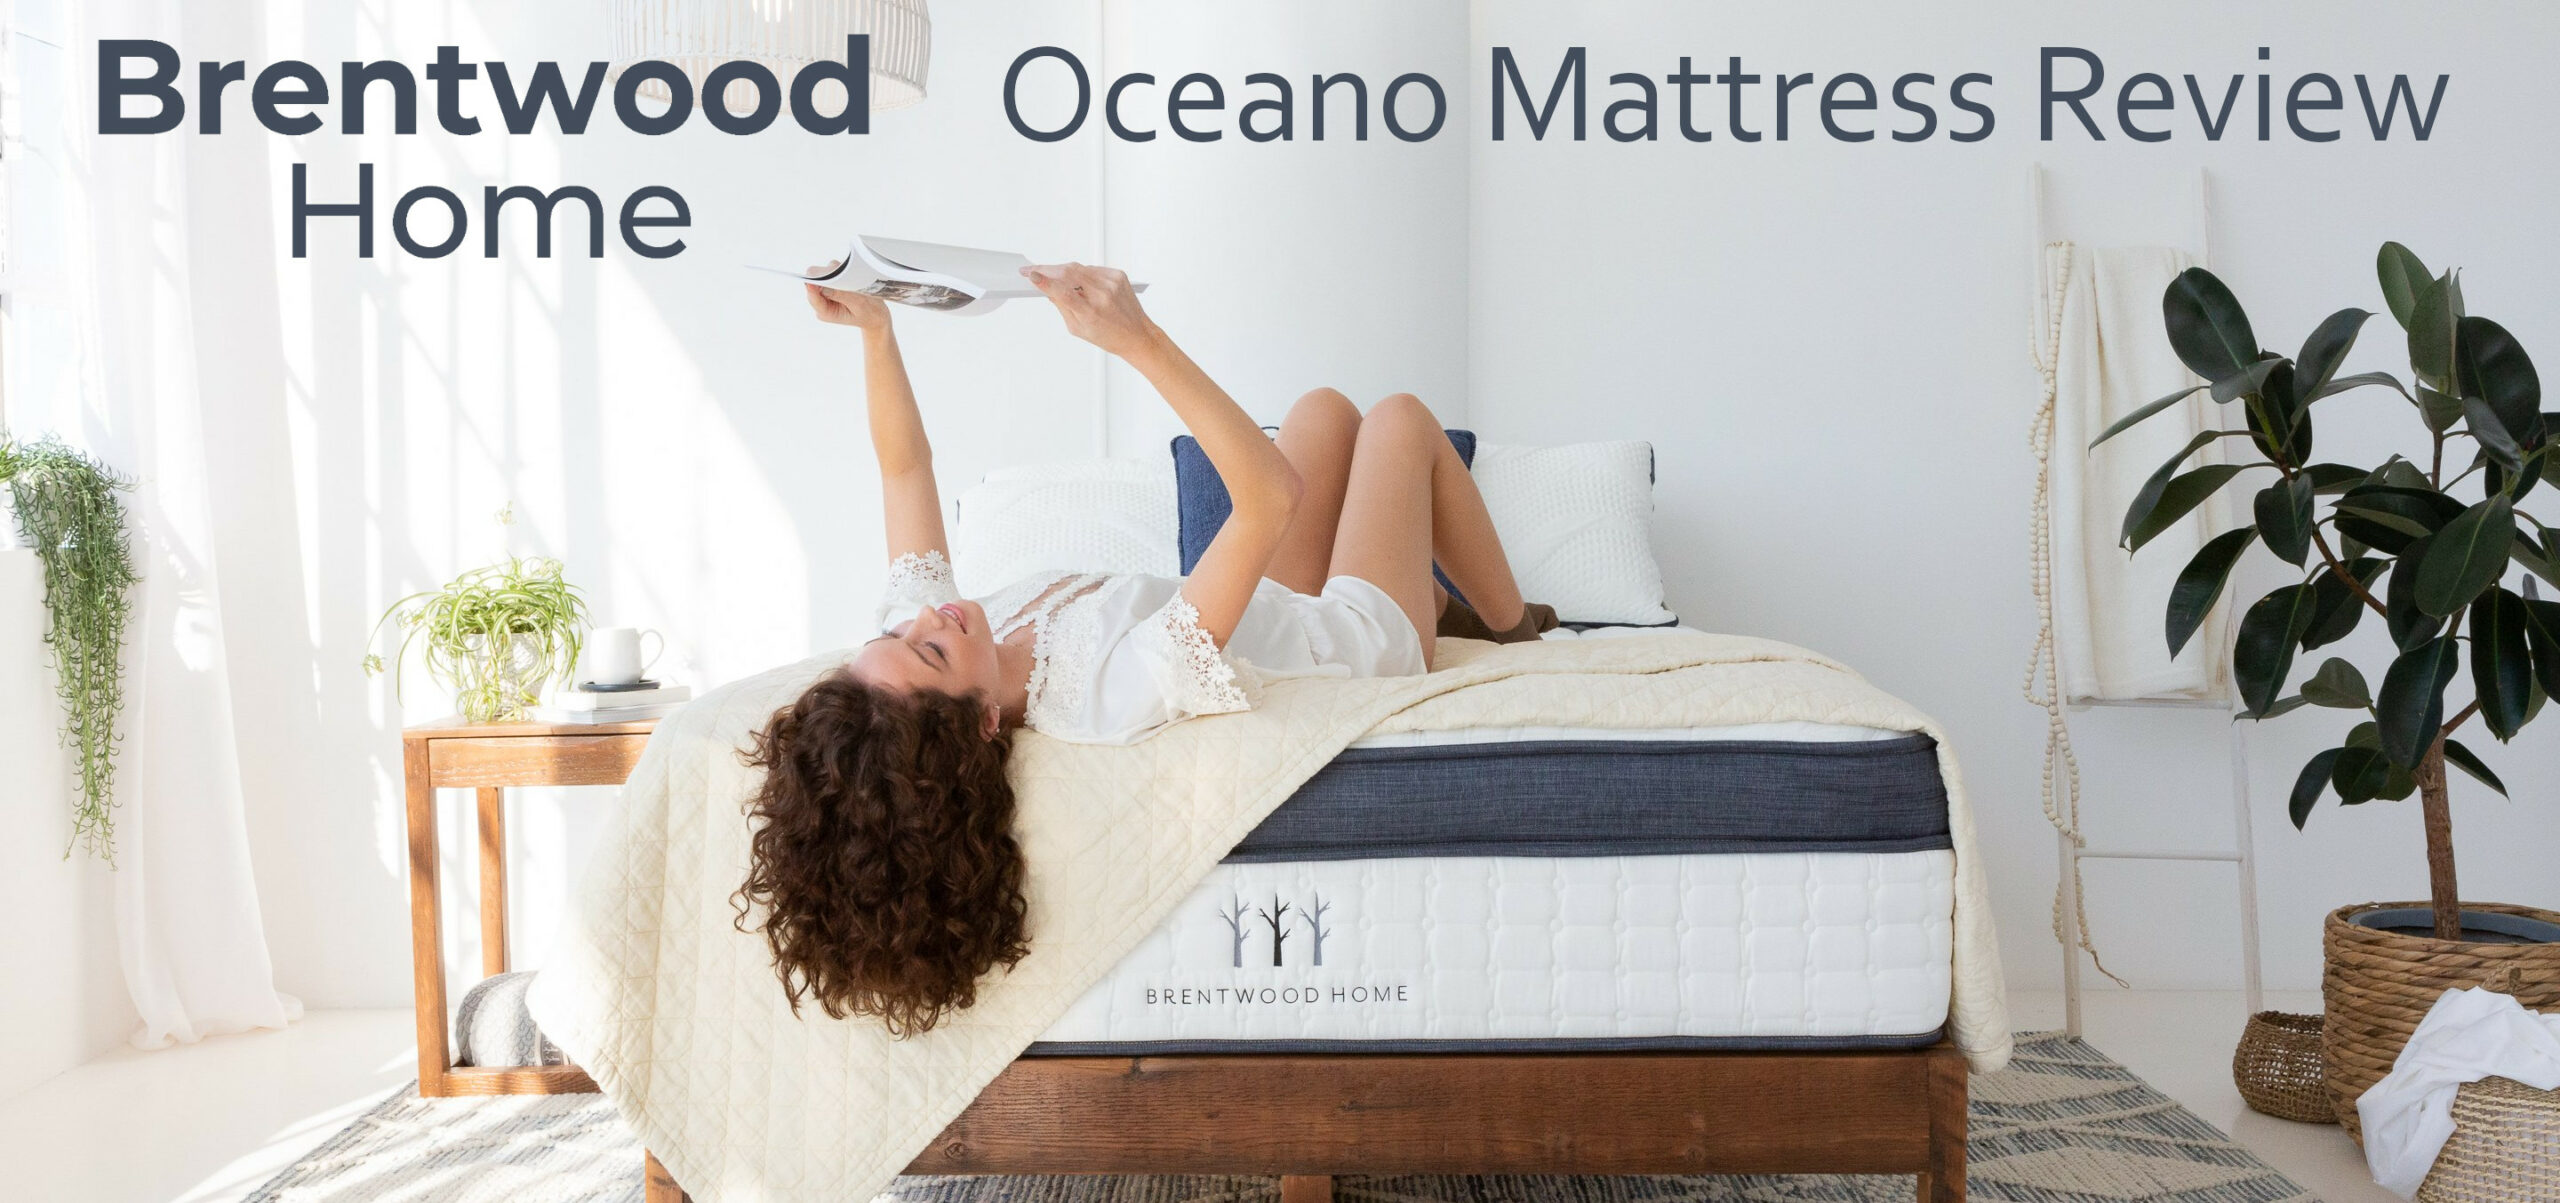 brentwood home oceano mattress review